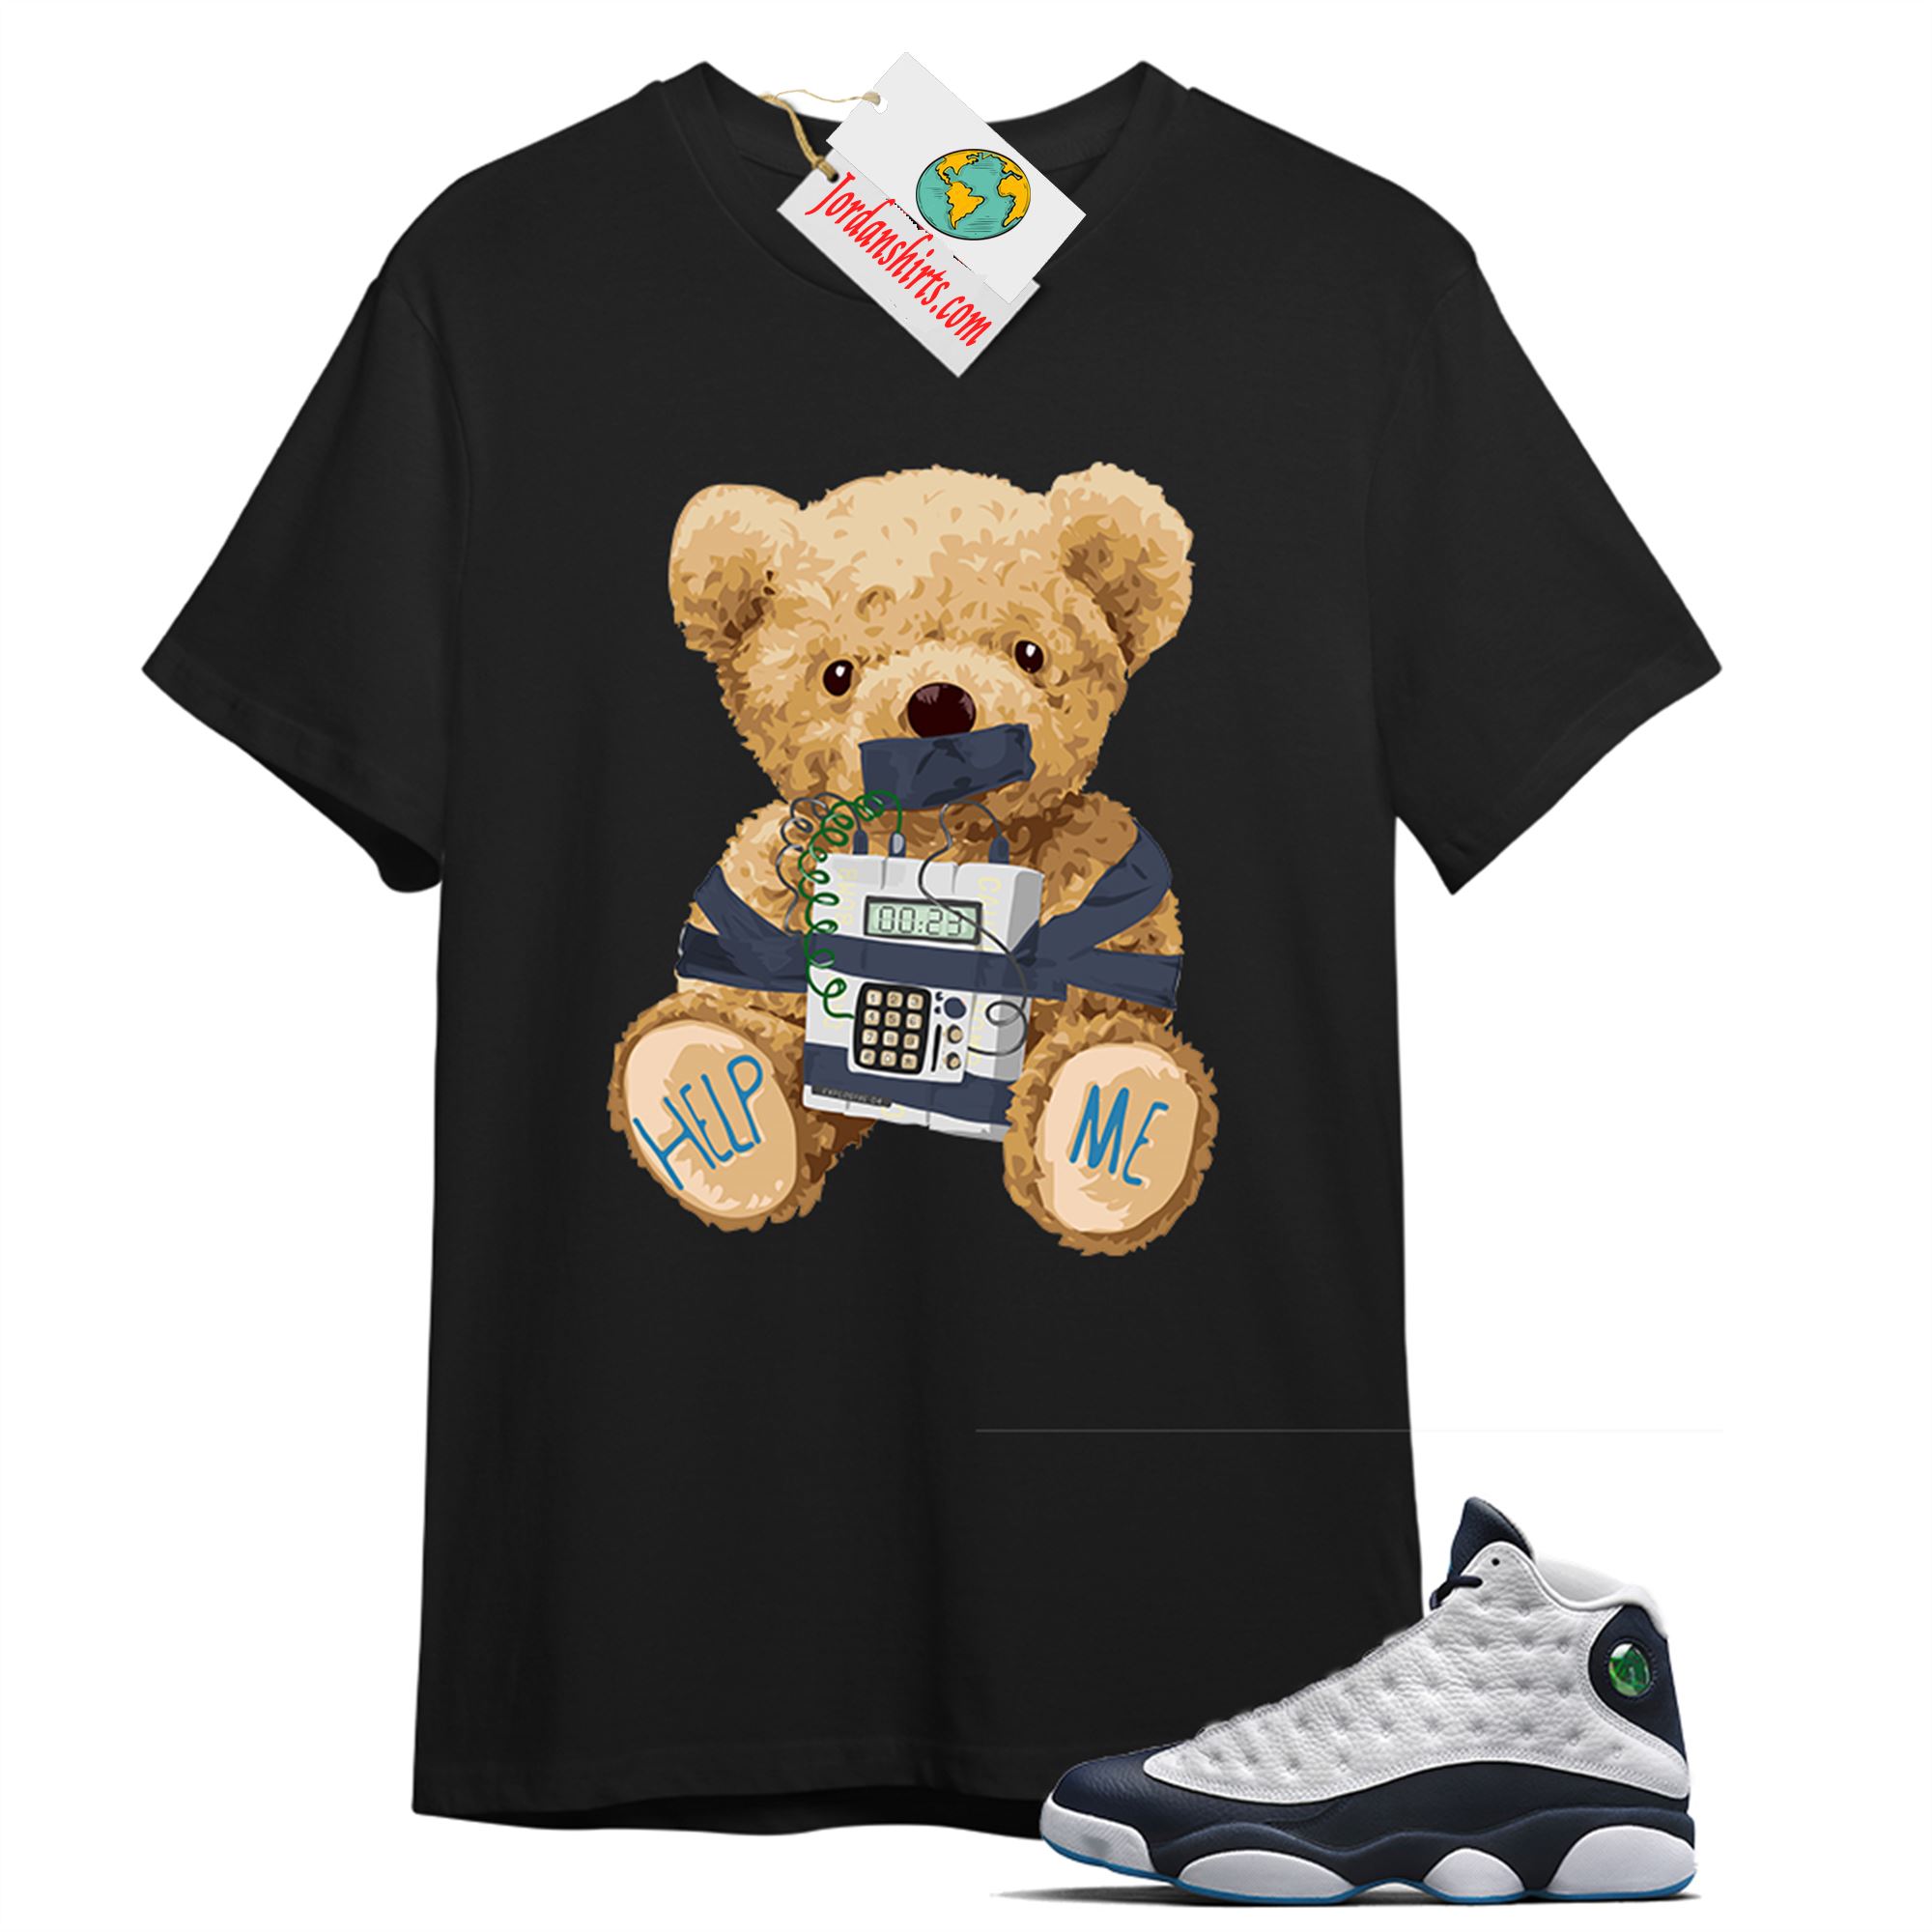 Jordan 13 Shirt, Teddy Bear Bomb Black T-shirt Air Jordan 13 Obsidian 13s Size Up To 5xl